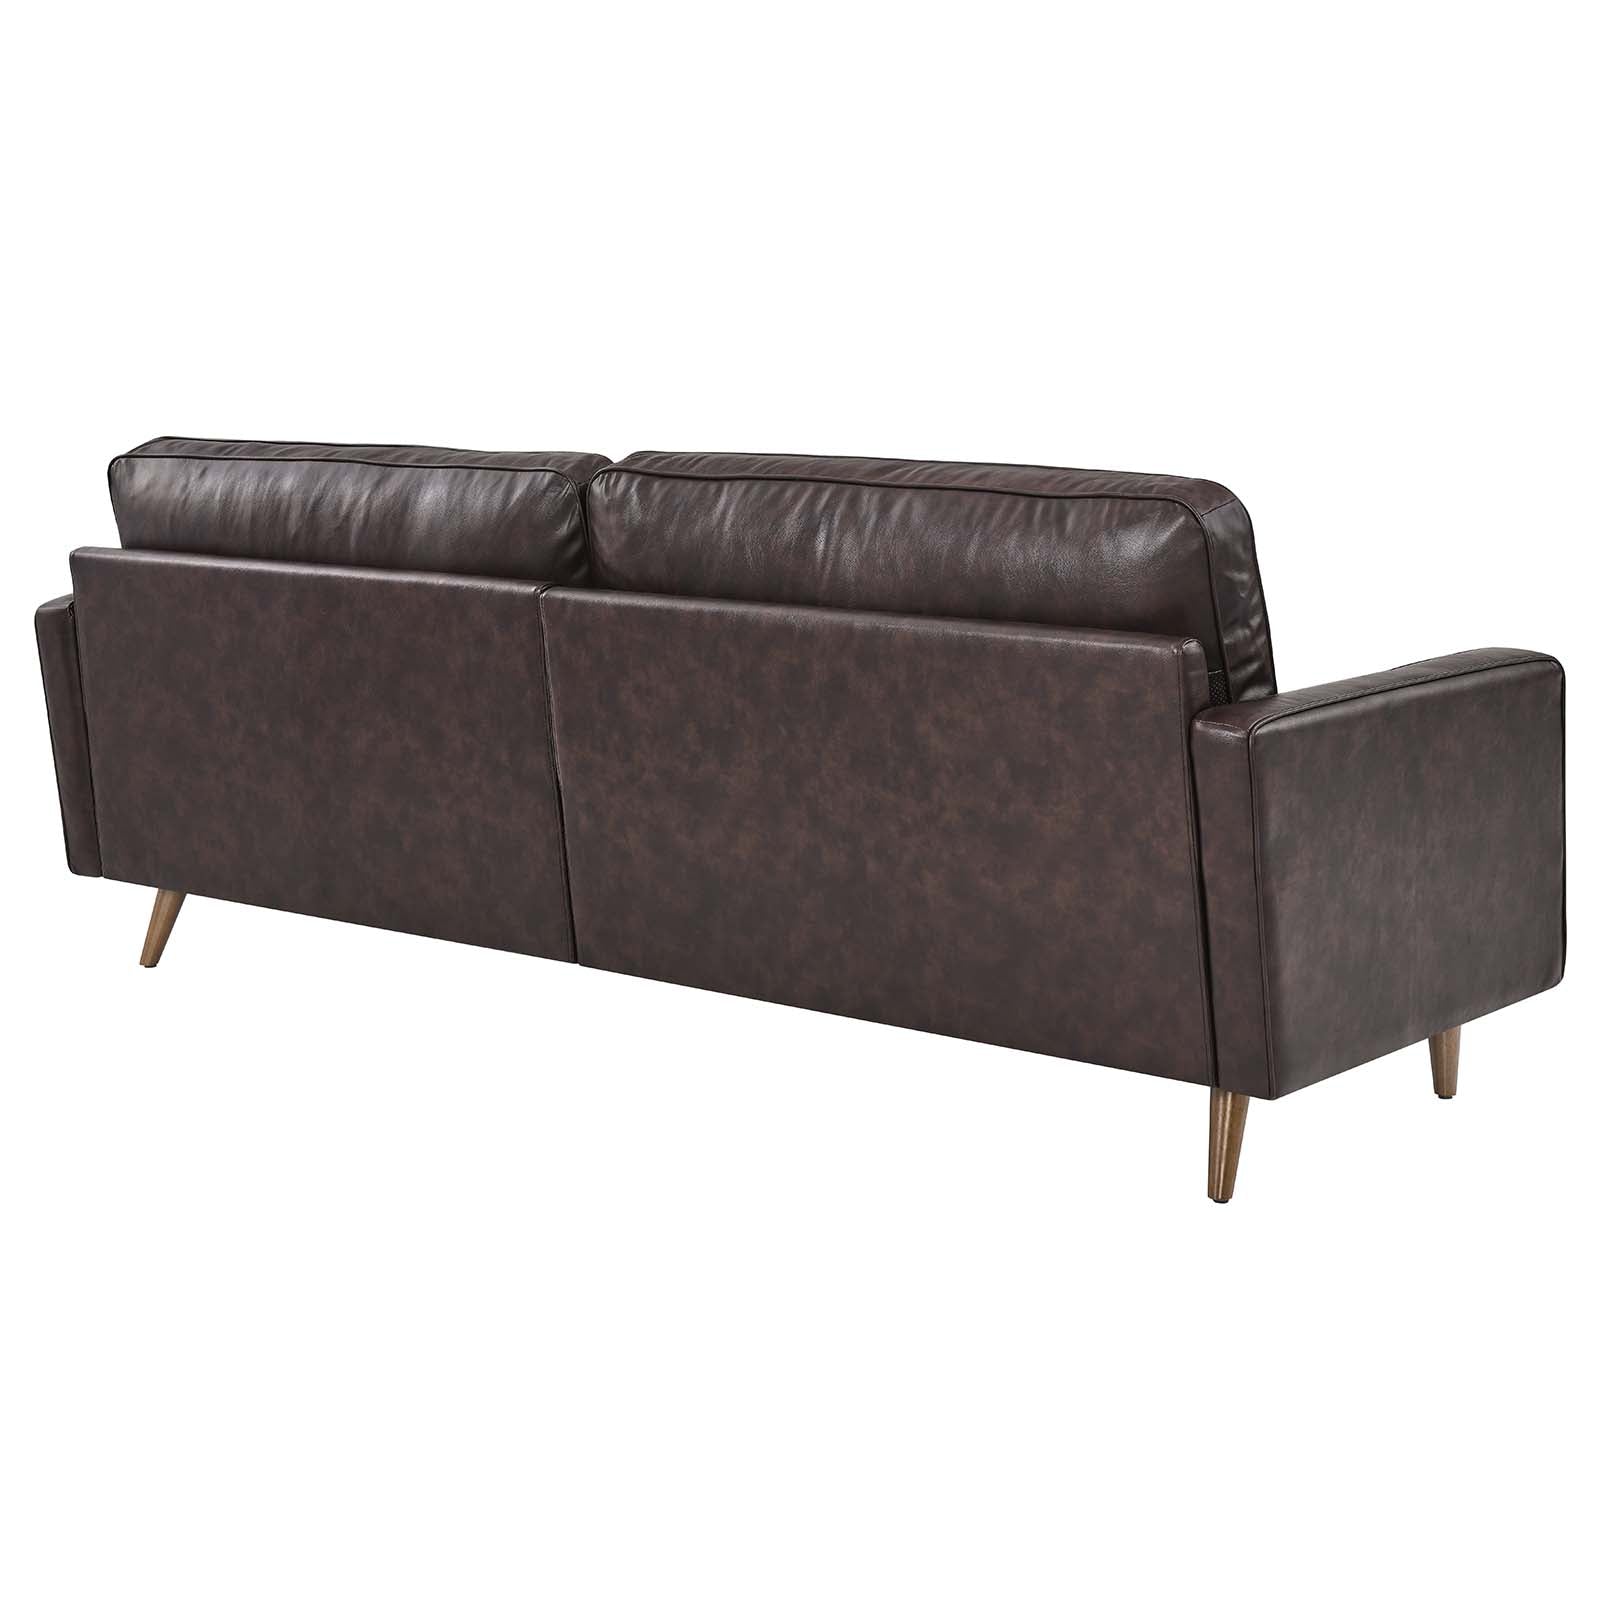 Valour 88" Leather Sofa - East Shore Modern Home Furnishings